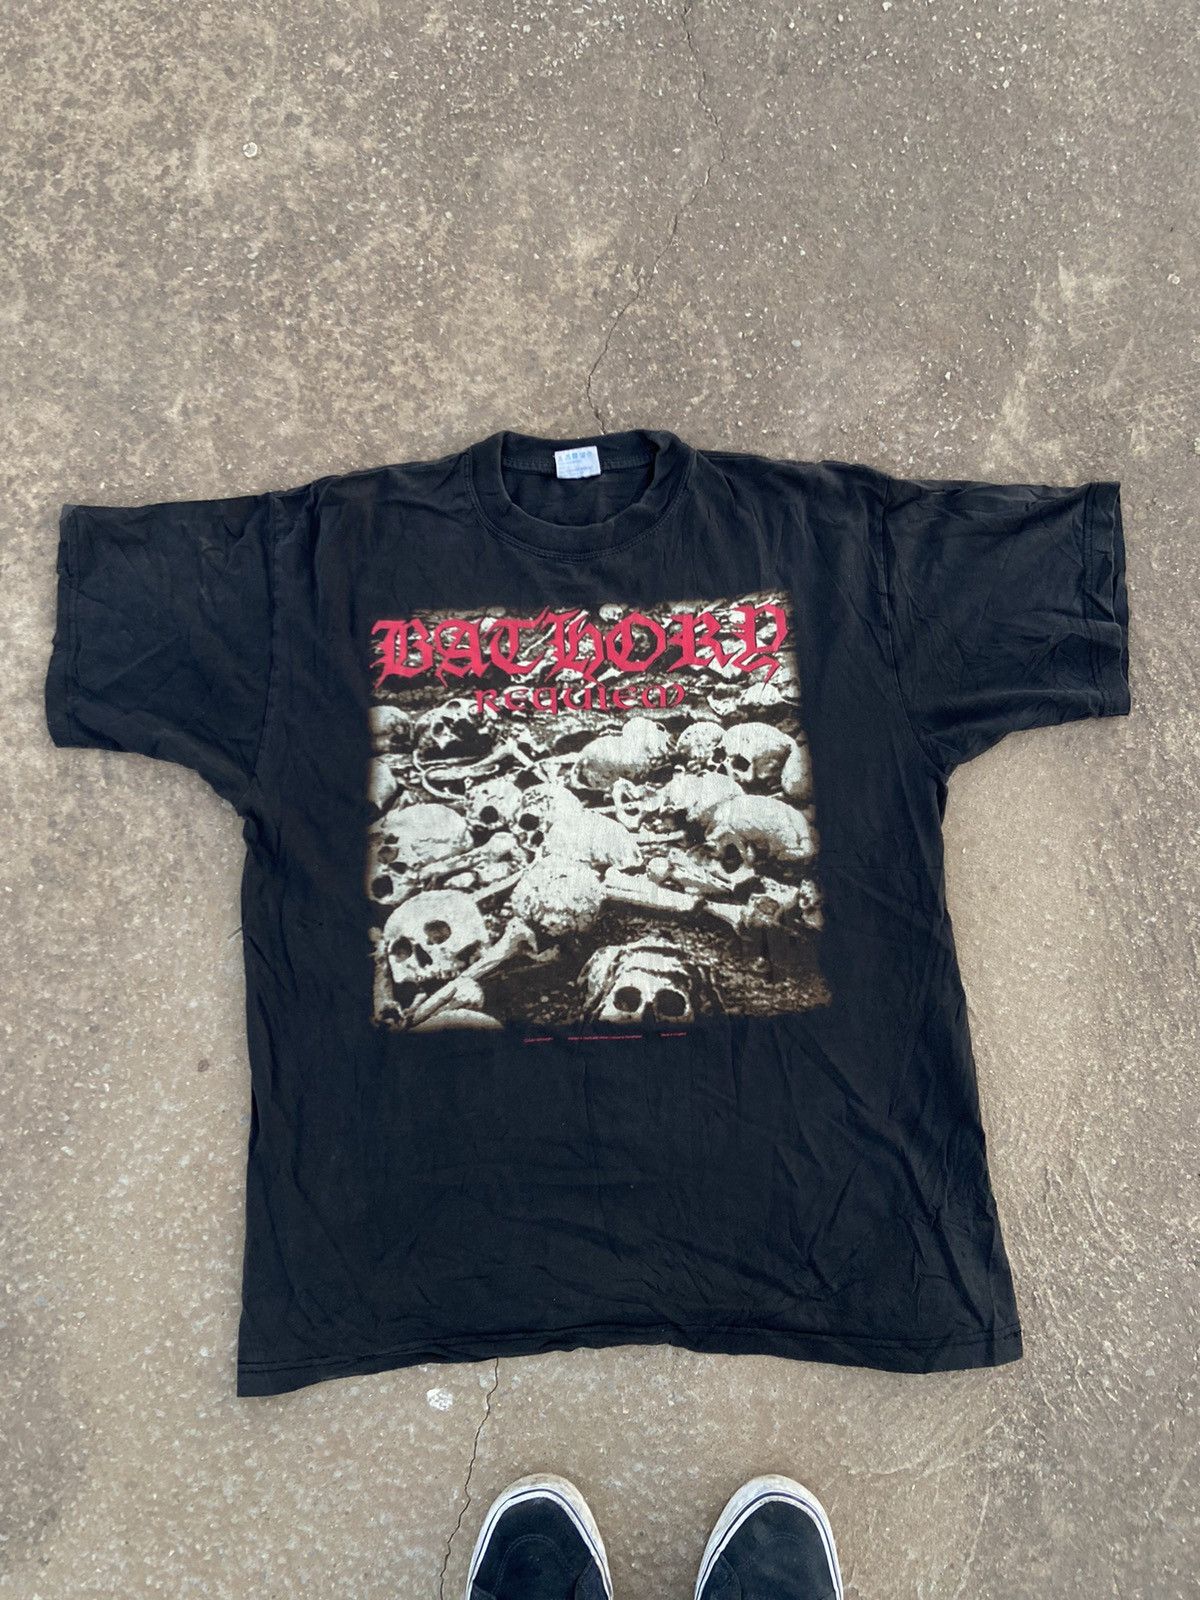 Pre-owned Band Tees X Rock T Shirt Vintage 2001 Bathory - Requiem T-shirt Like Mayhem Burzum In Black